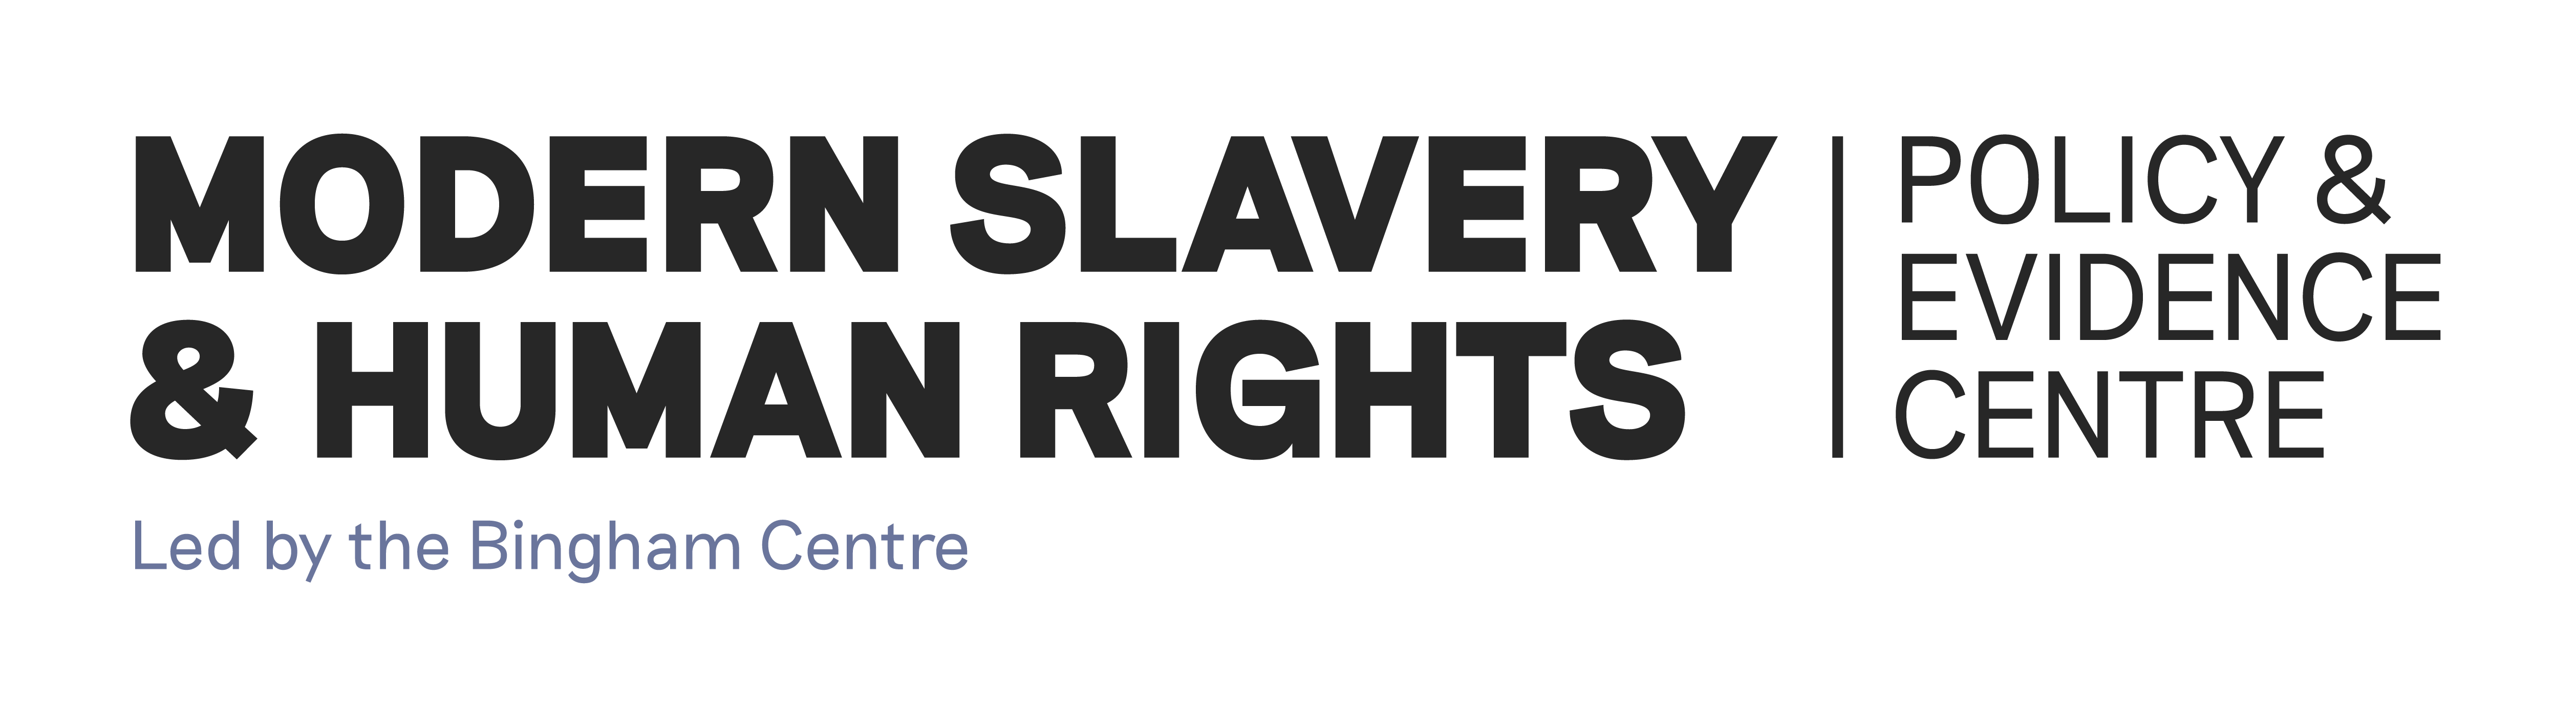 Modern Slavery PEC primary logo transparent for digital use